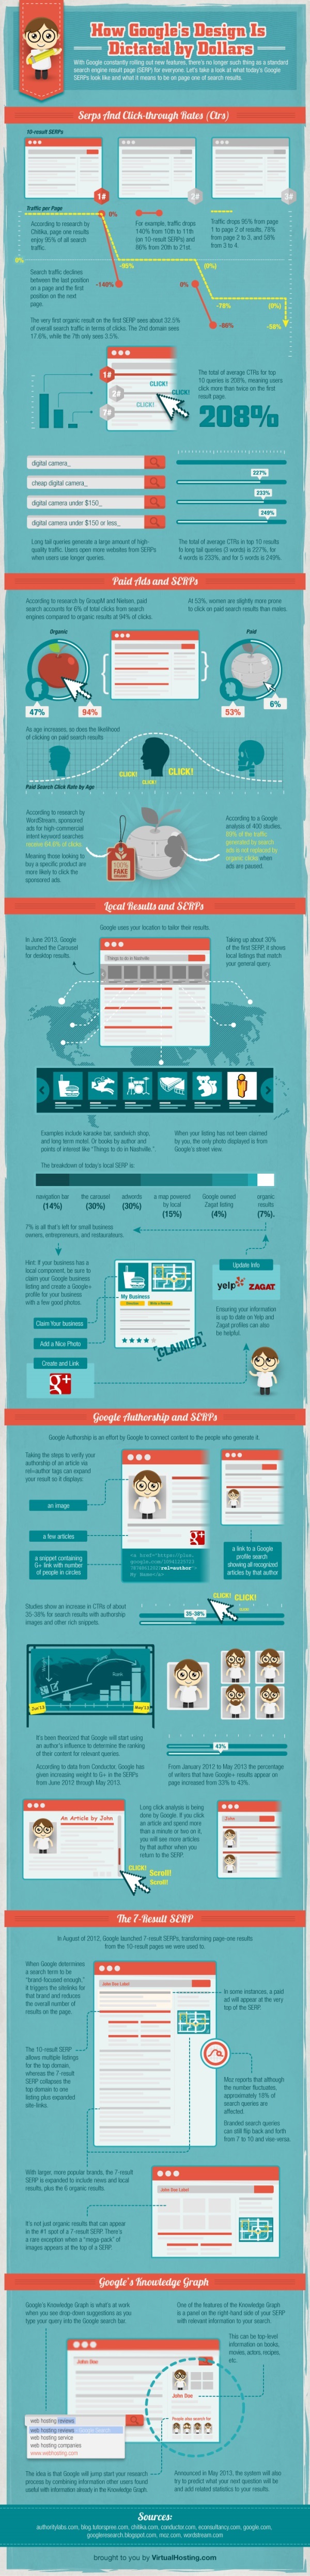 infographic on Google